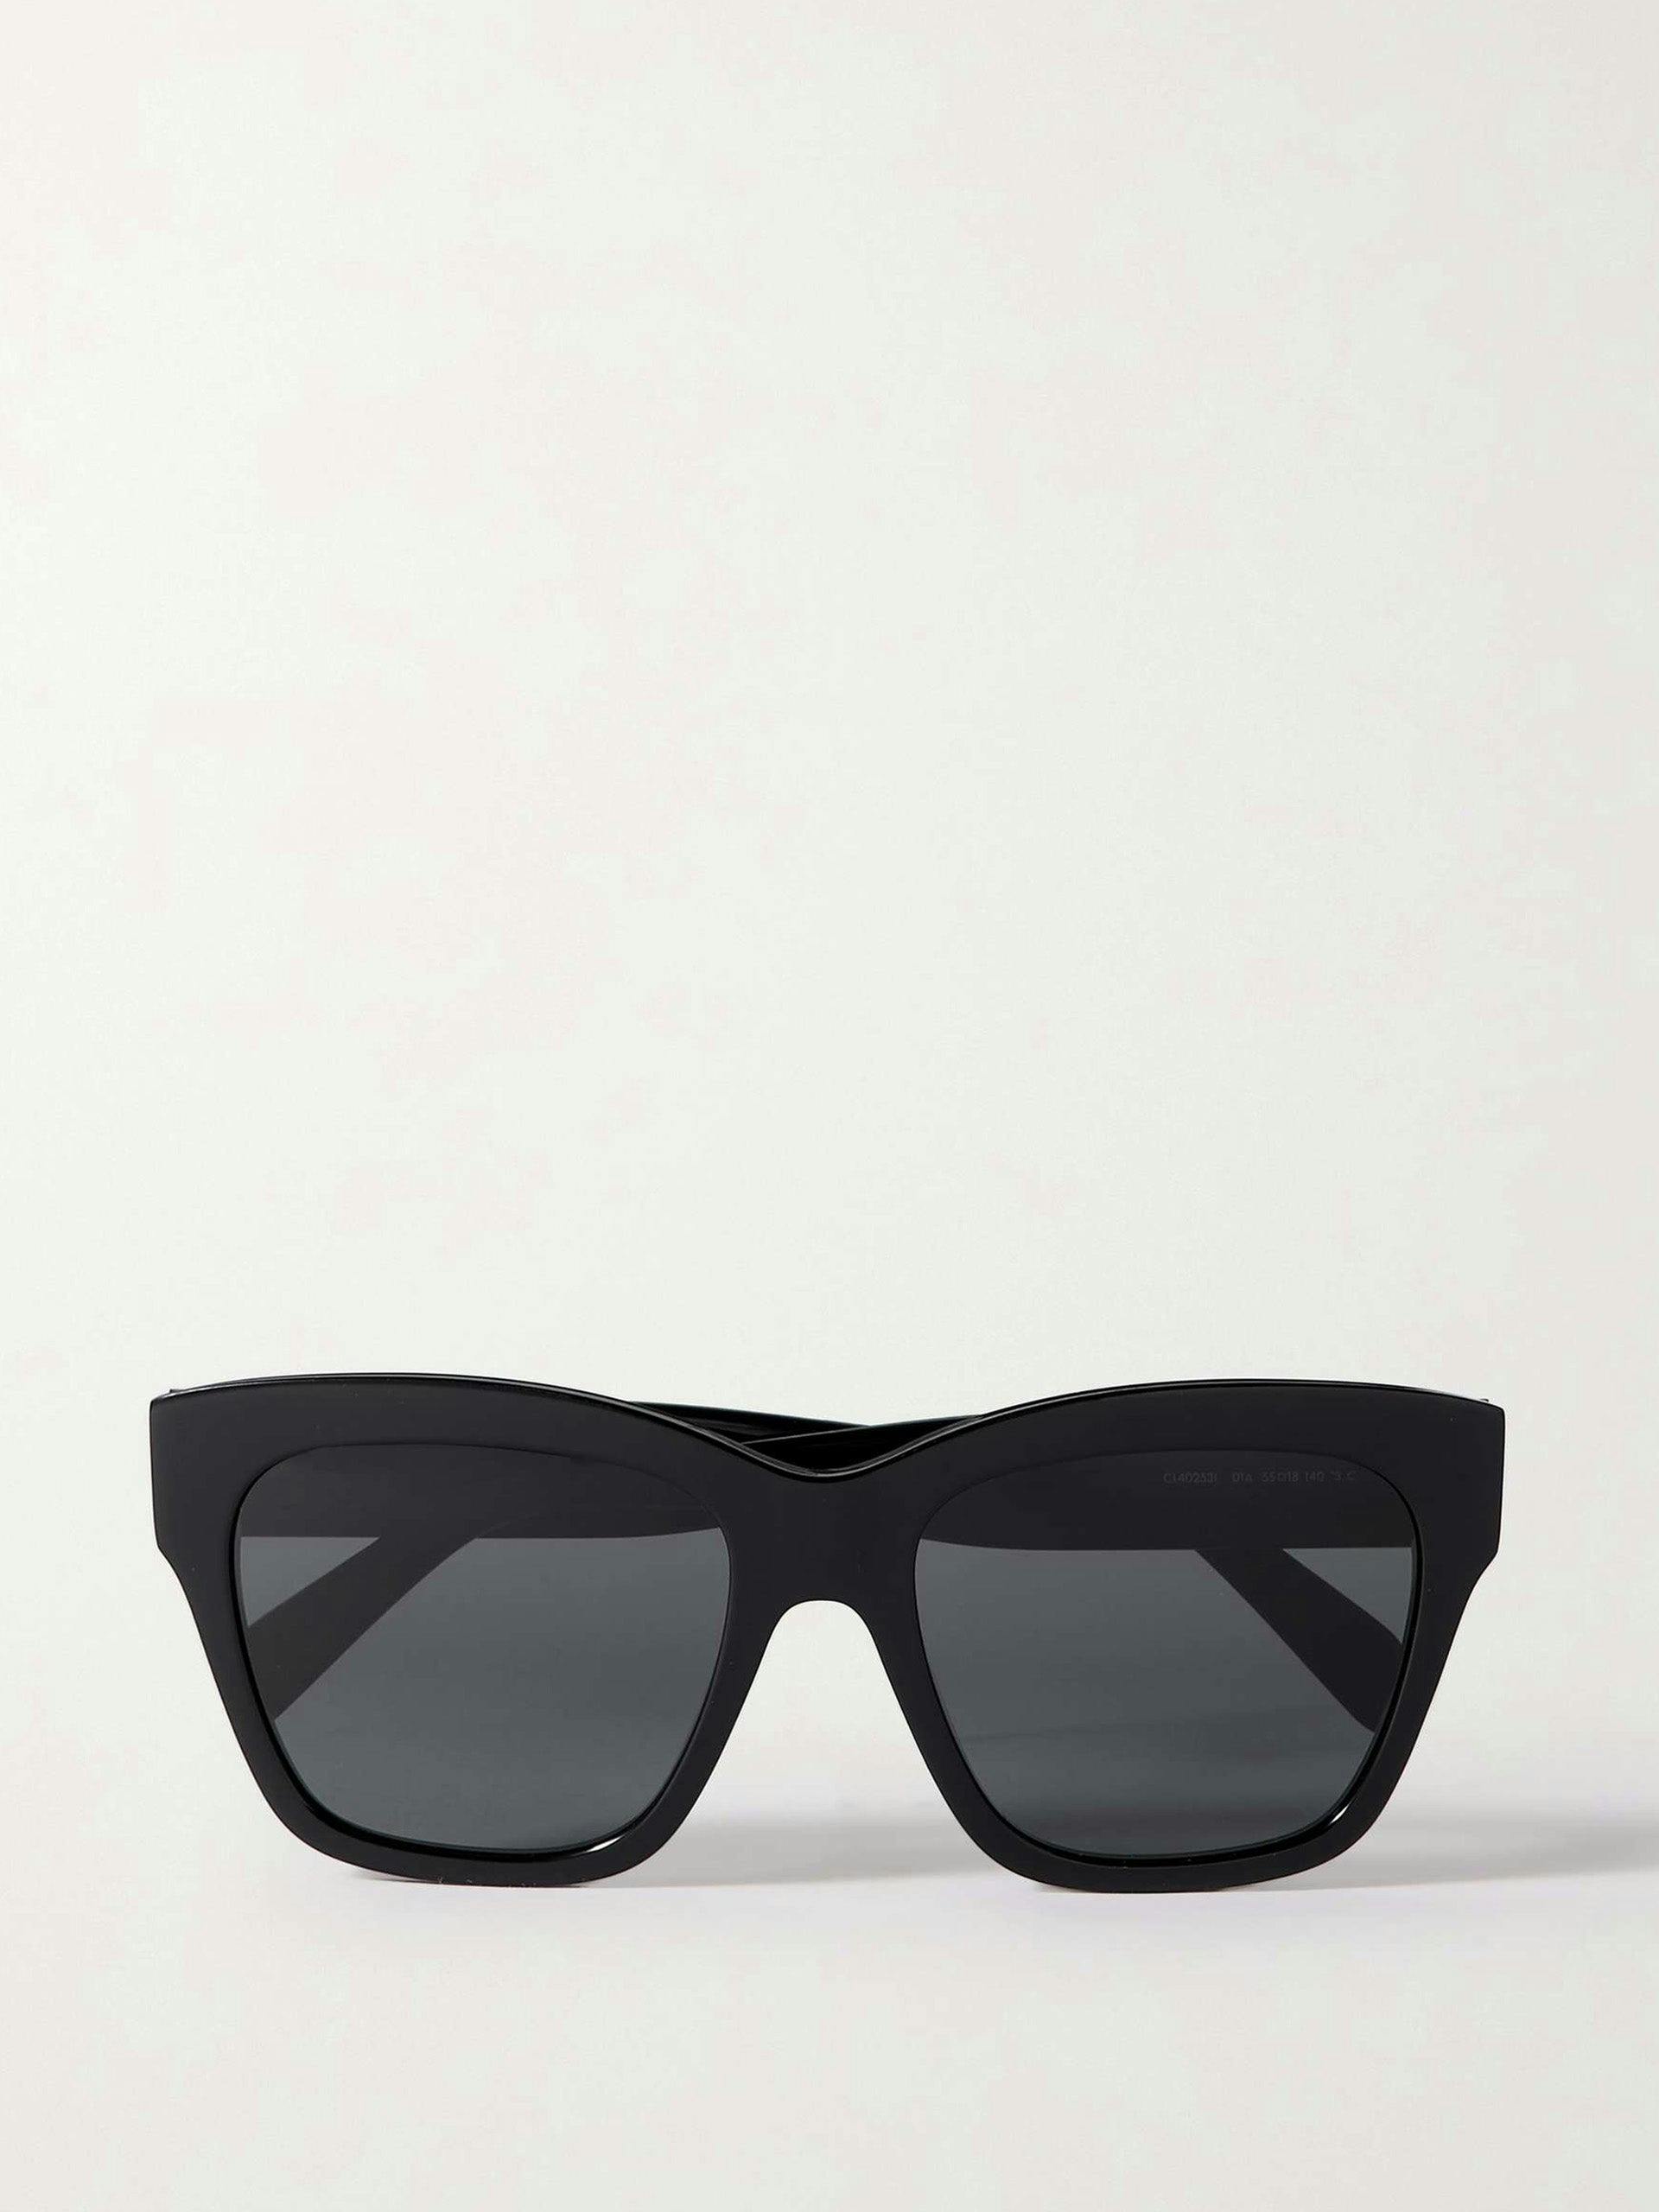 Triomphe square-frame acetate sunglasses